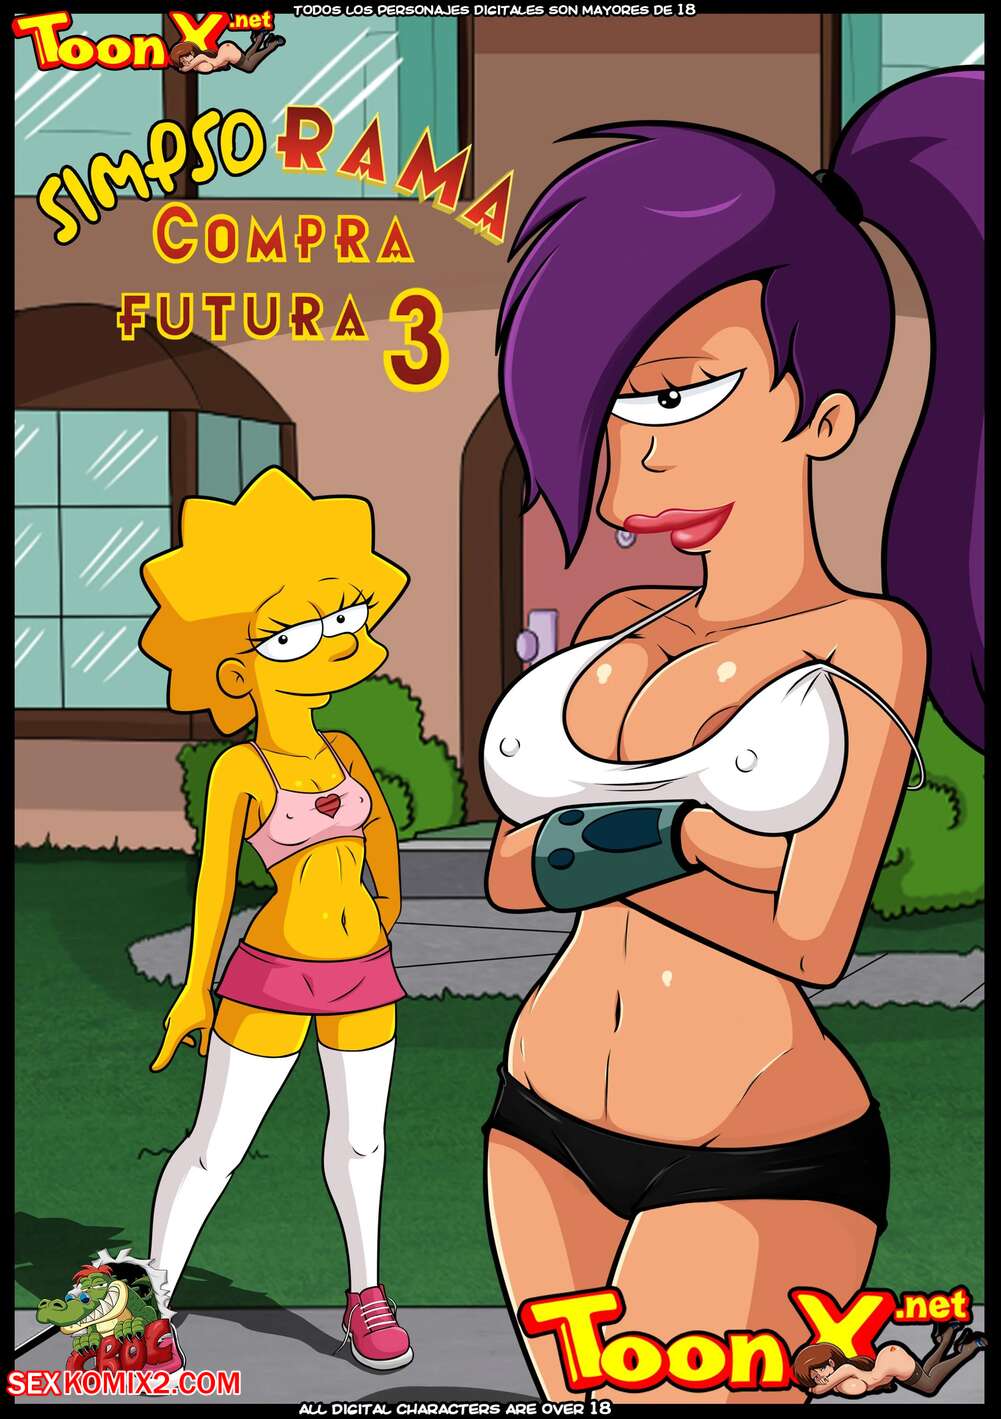 ✅️ Porn comic SimpsoRama. Chapter 3. The Simpsons , Futurama. Croc. Sex  comic beauty woke up | Porn comics in English for adults only |  sexkomix2.com